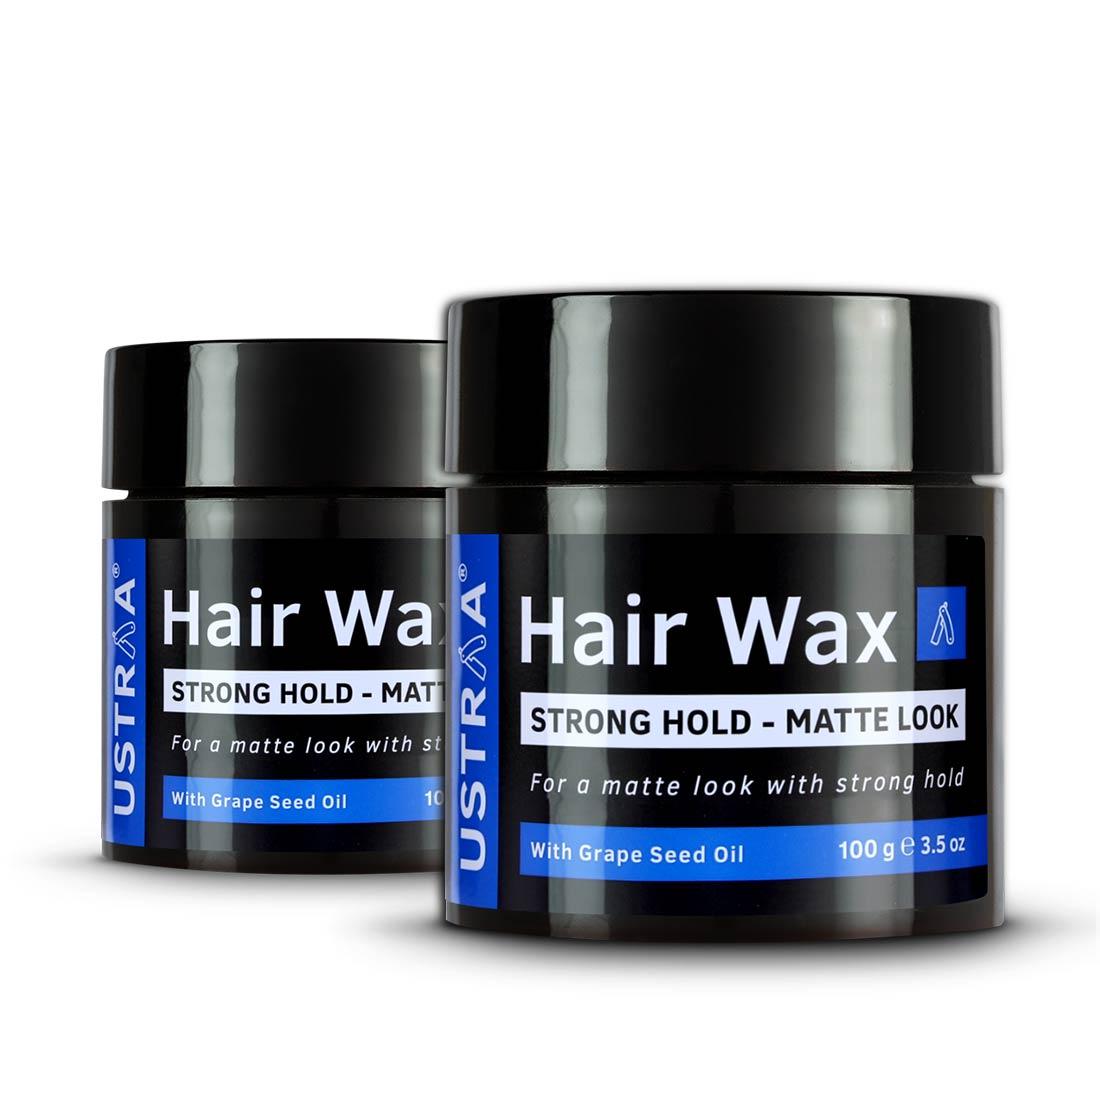 Hair Wax - Strong Hold, Matte Look - 100g (Set of 2)